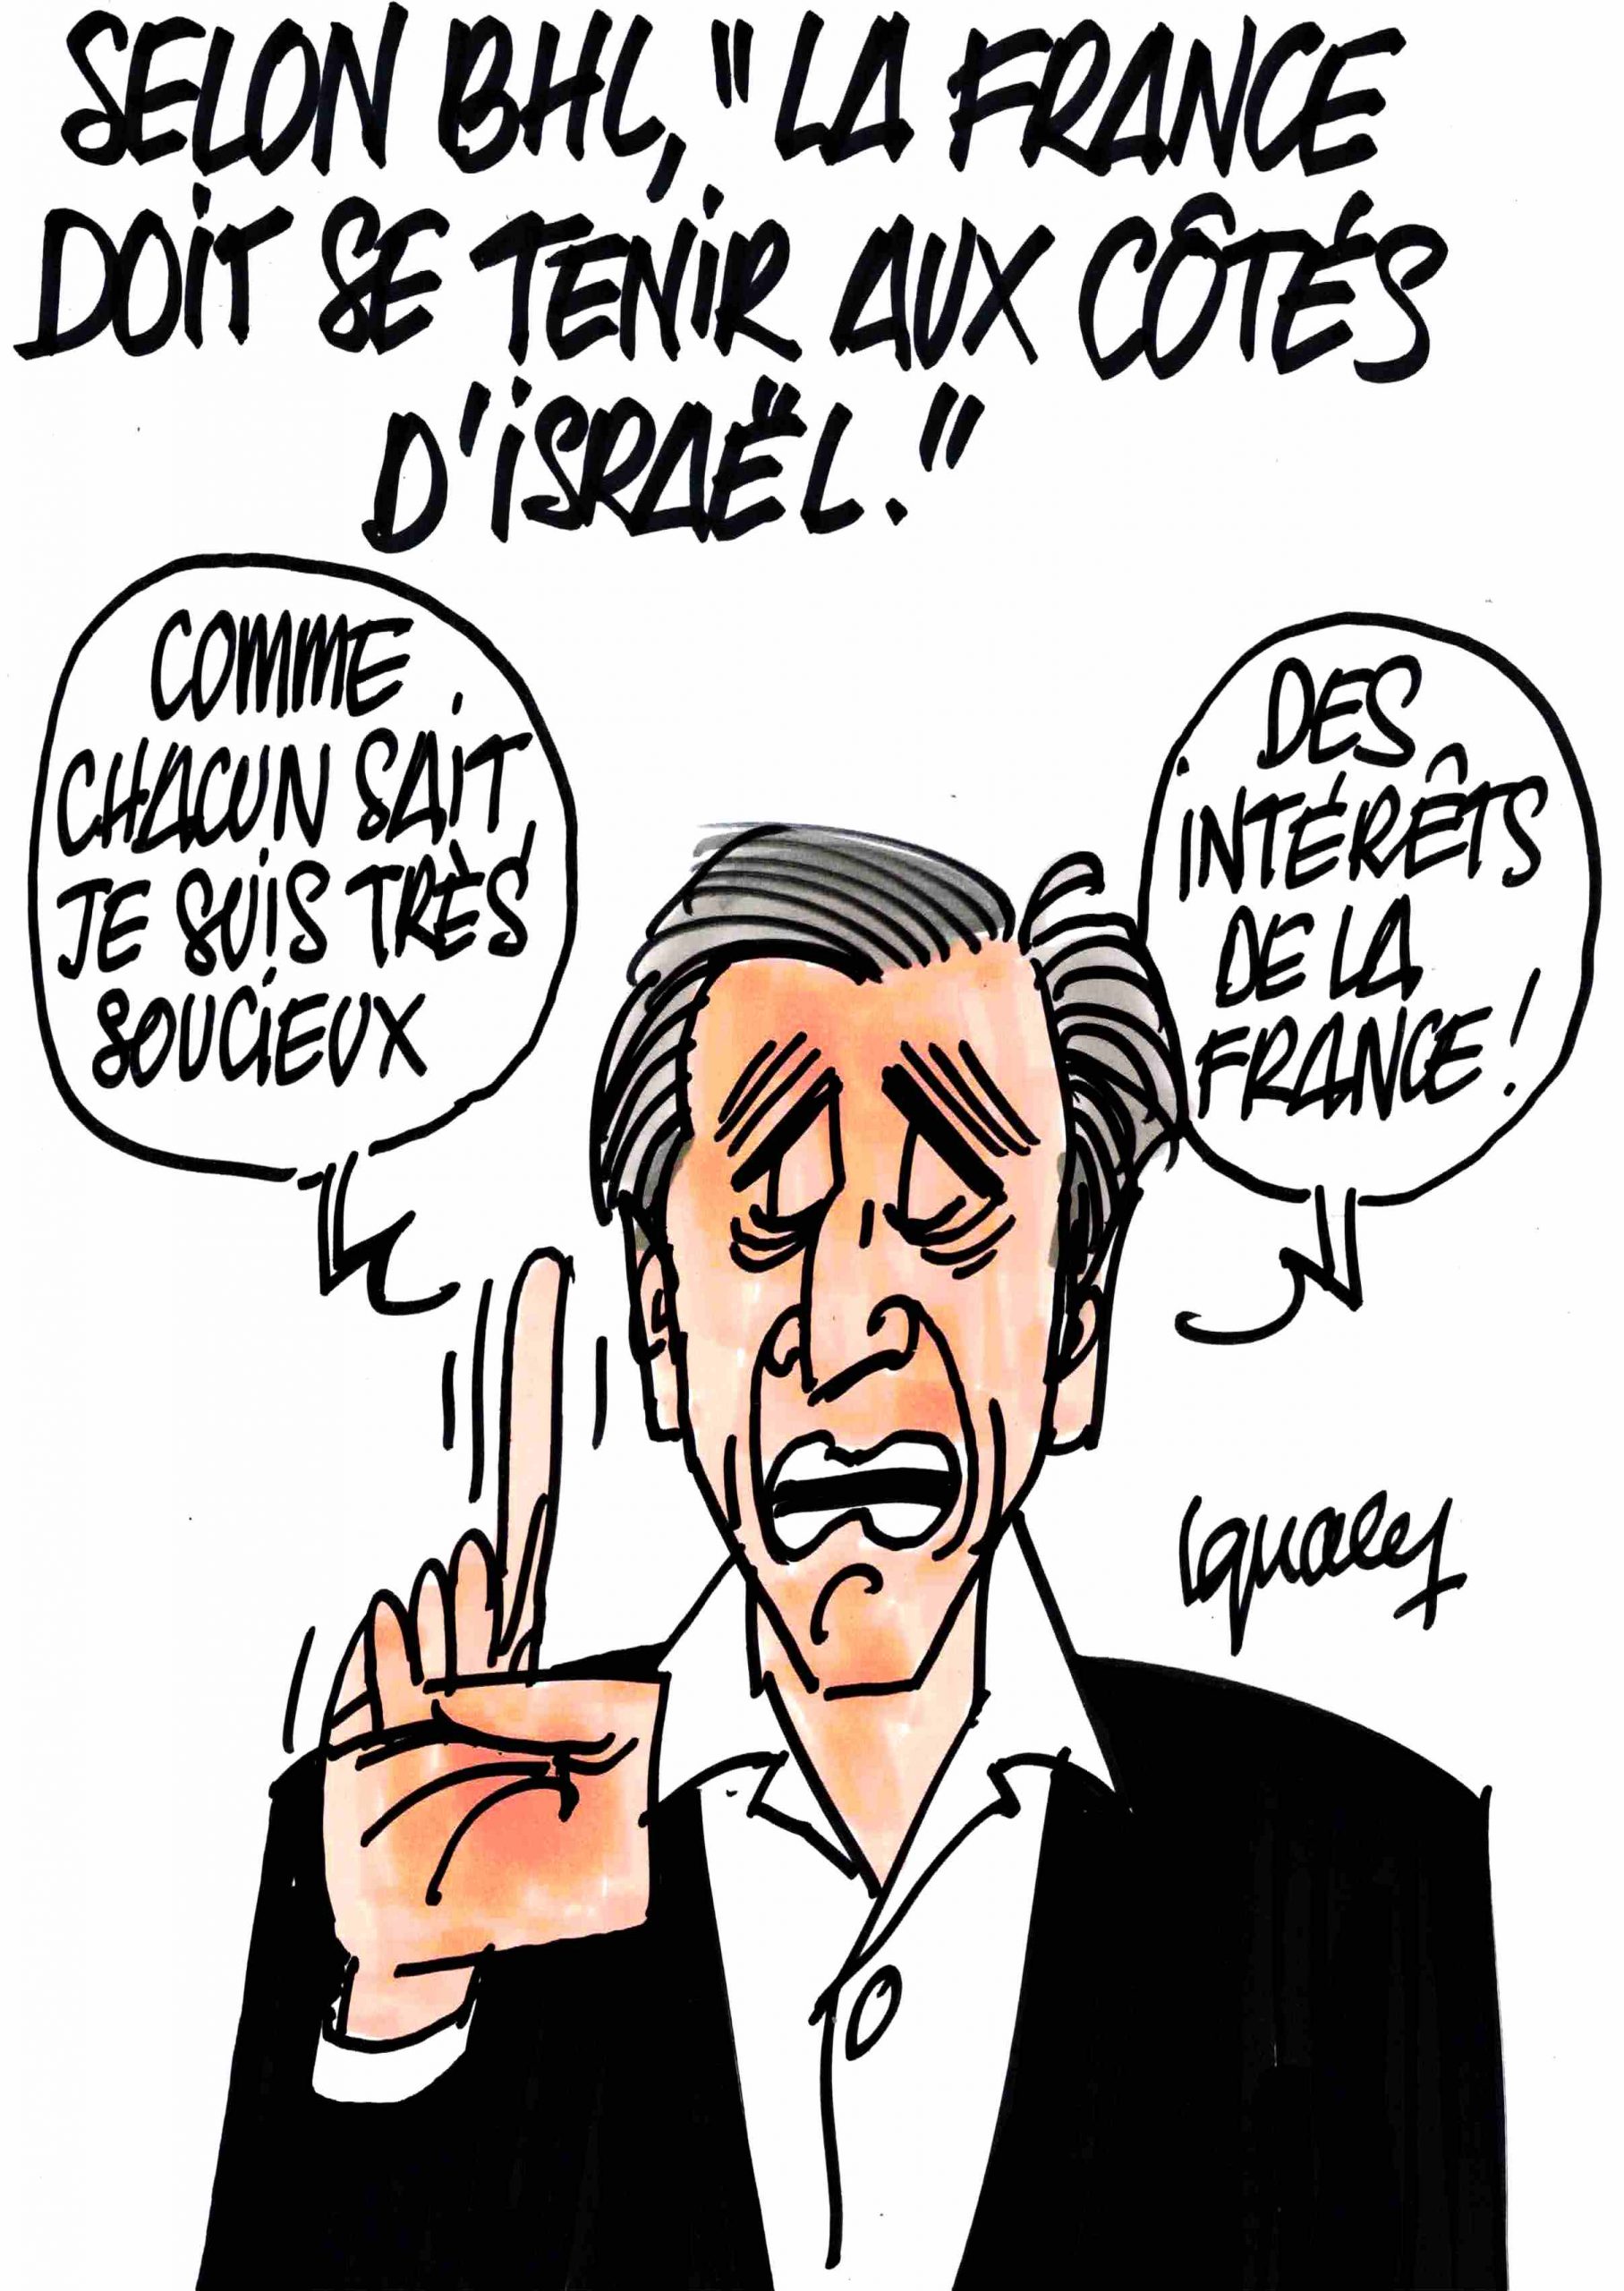 Ignace - BHL veut la France aux côtés d'Israël